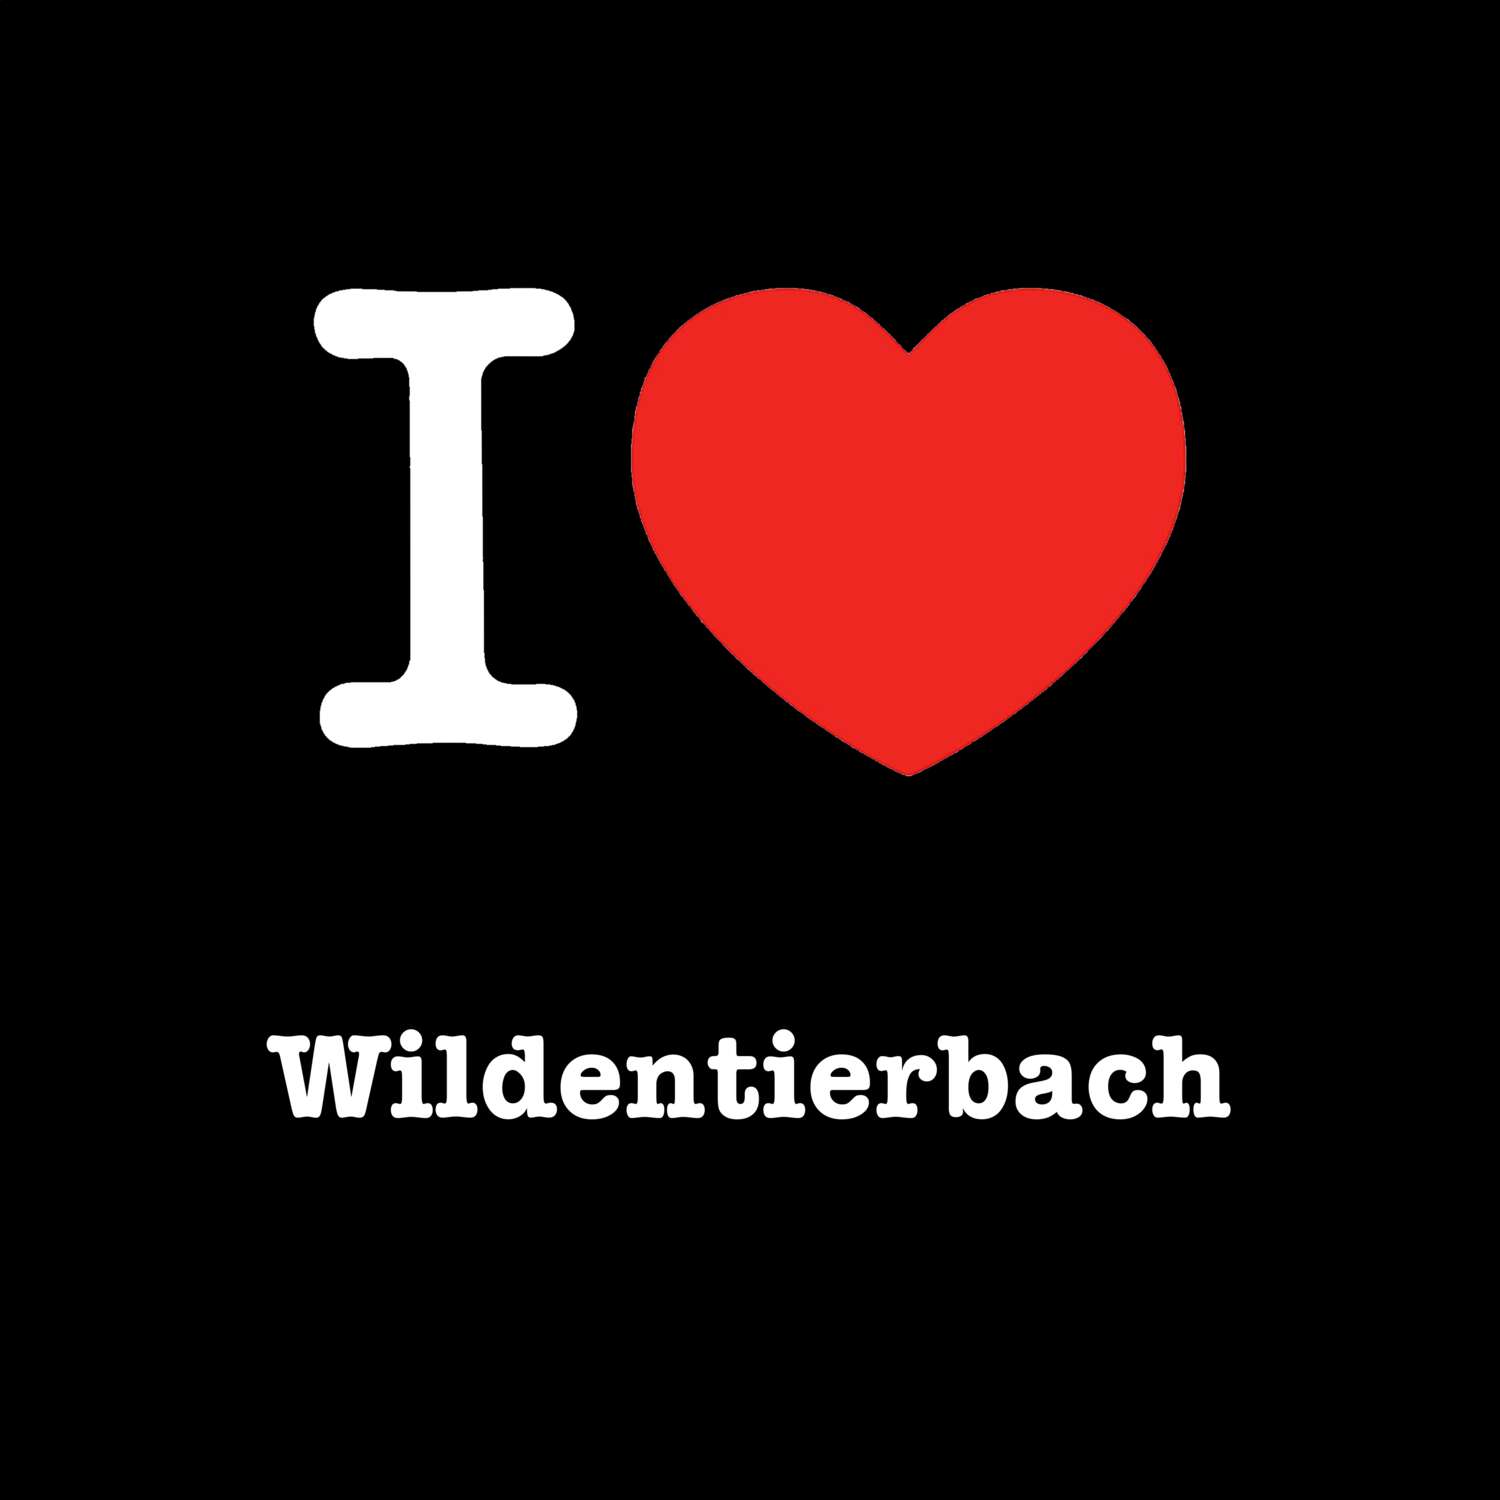 Wildentierbach T-Shirt »I love«